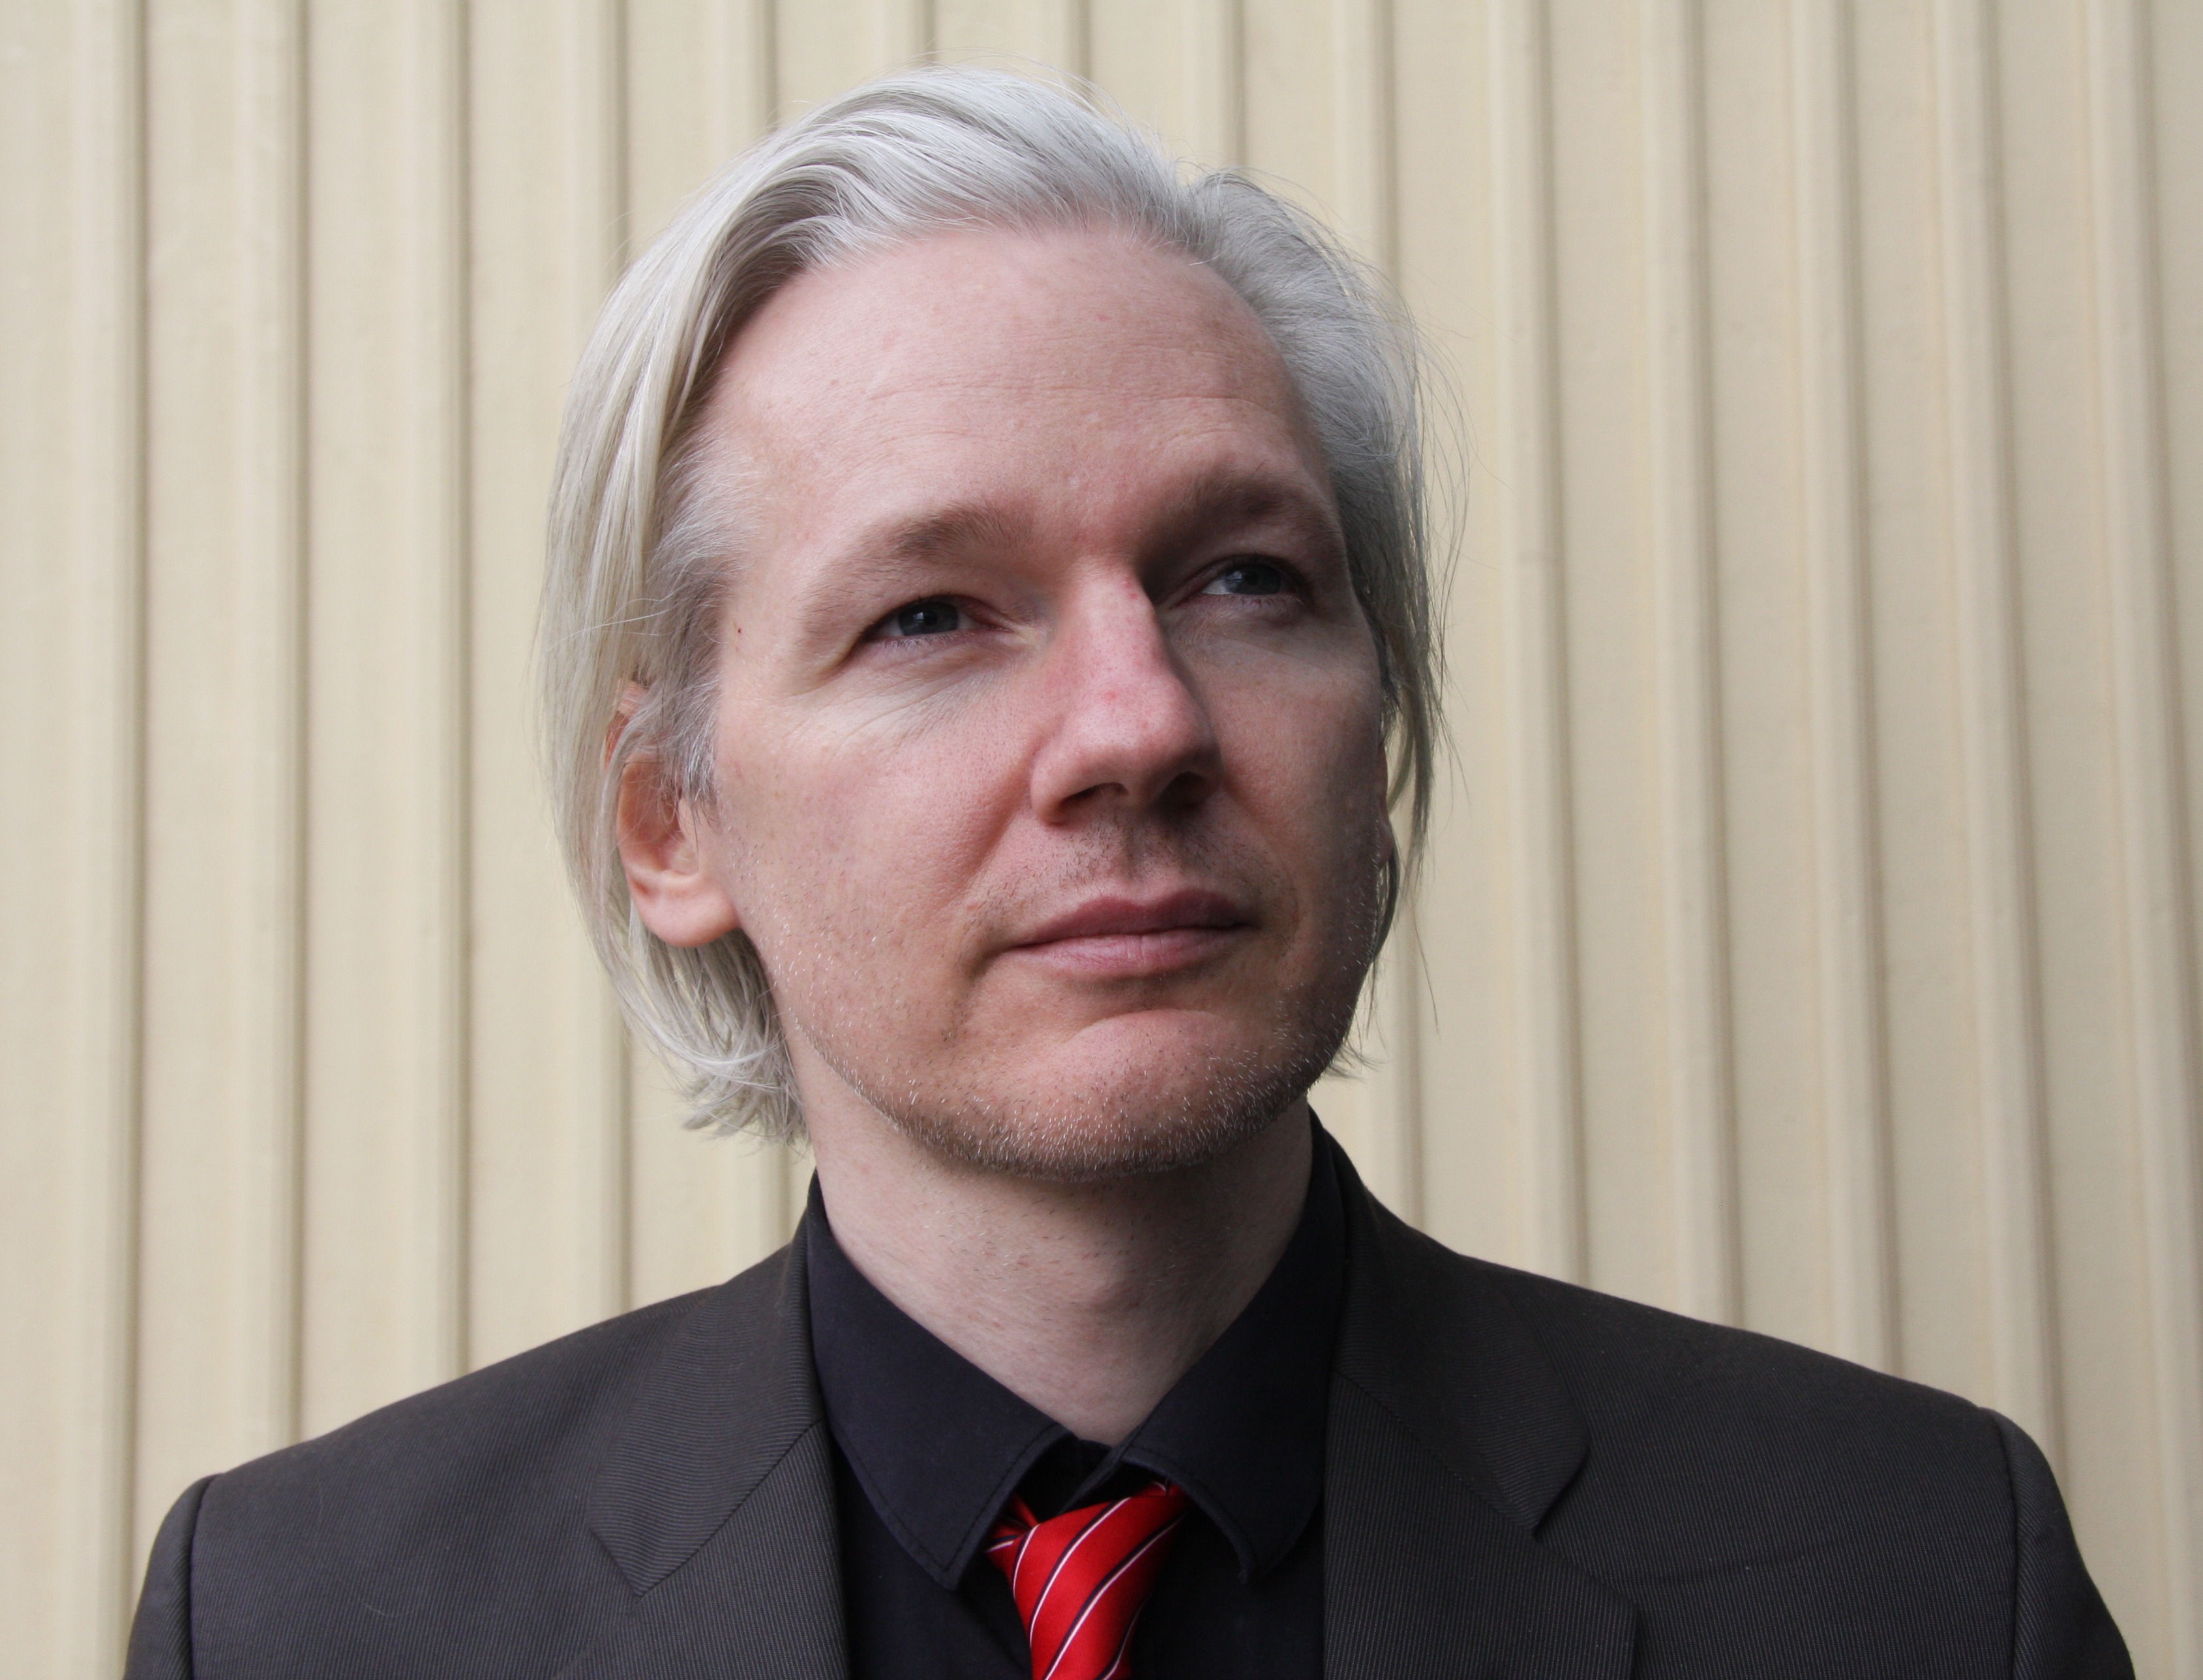 Mr. Julian Paul Assange